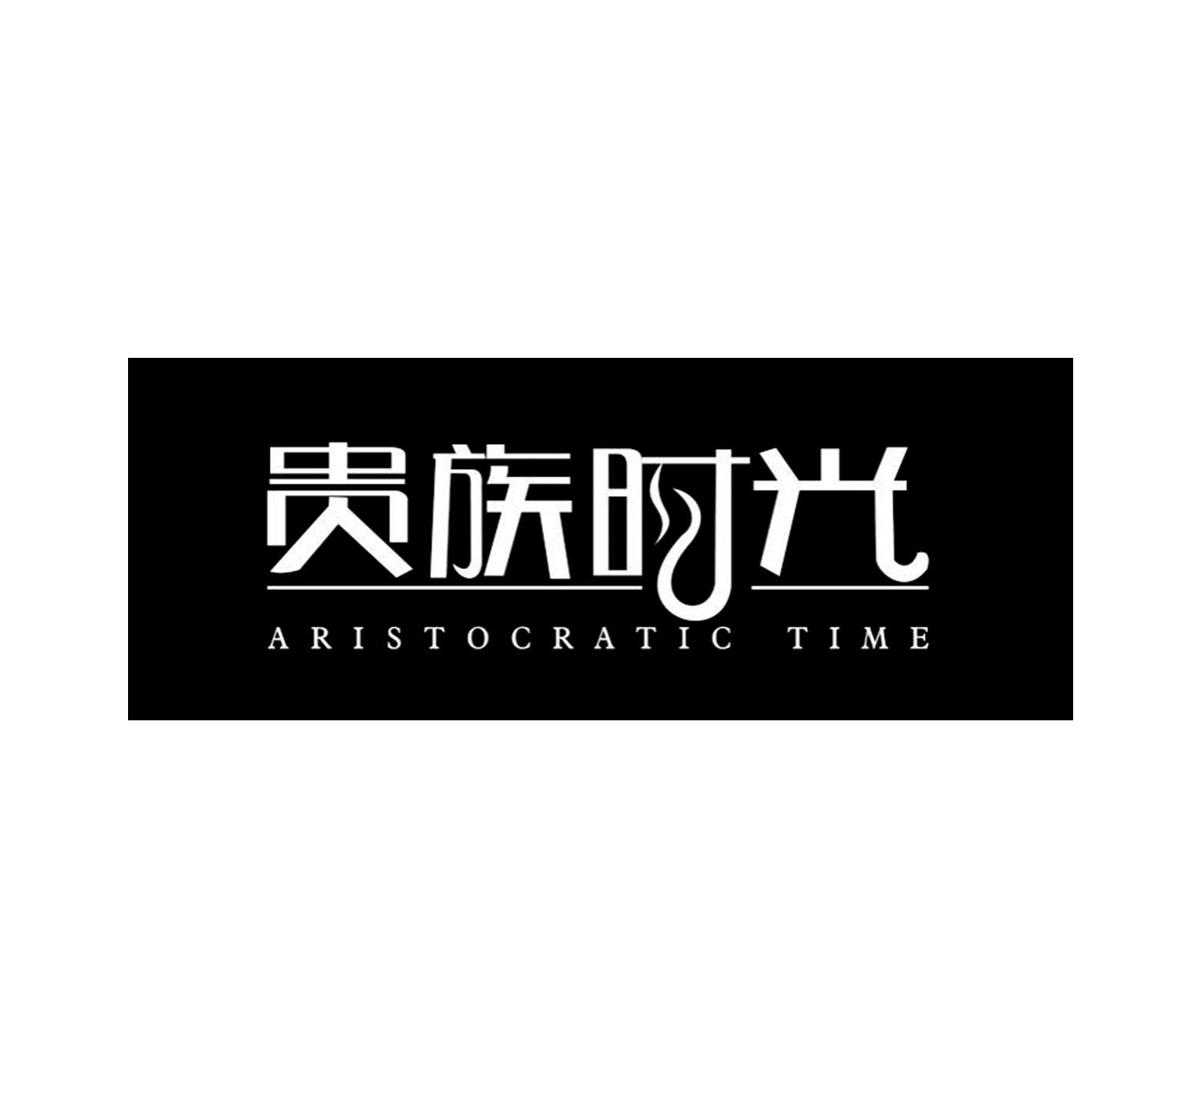 41类-教育文娱贵族时光 ARISTOCRATIC TIME商标转让